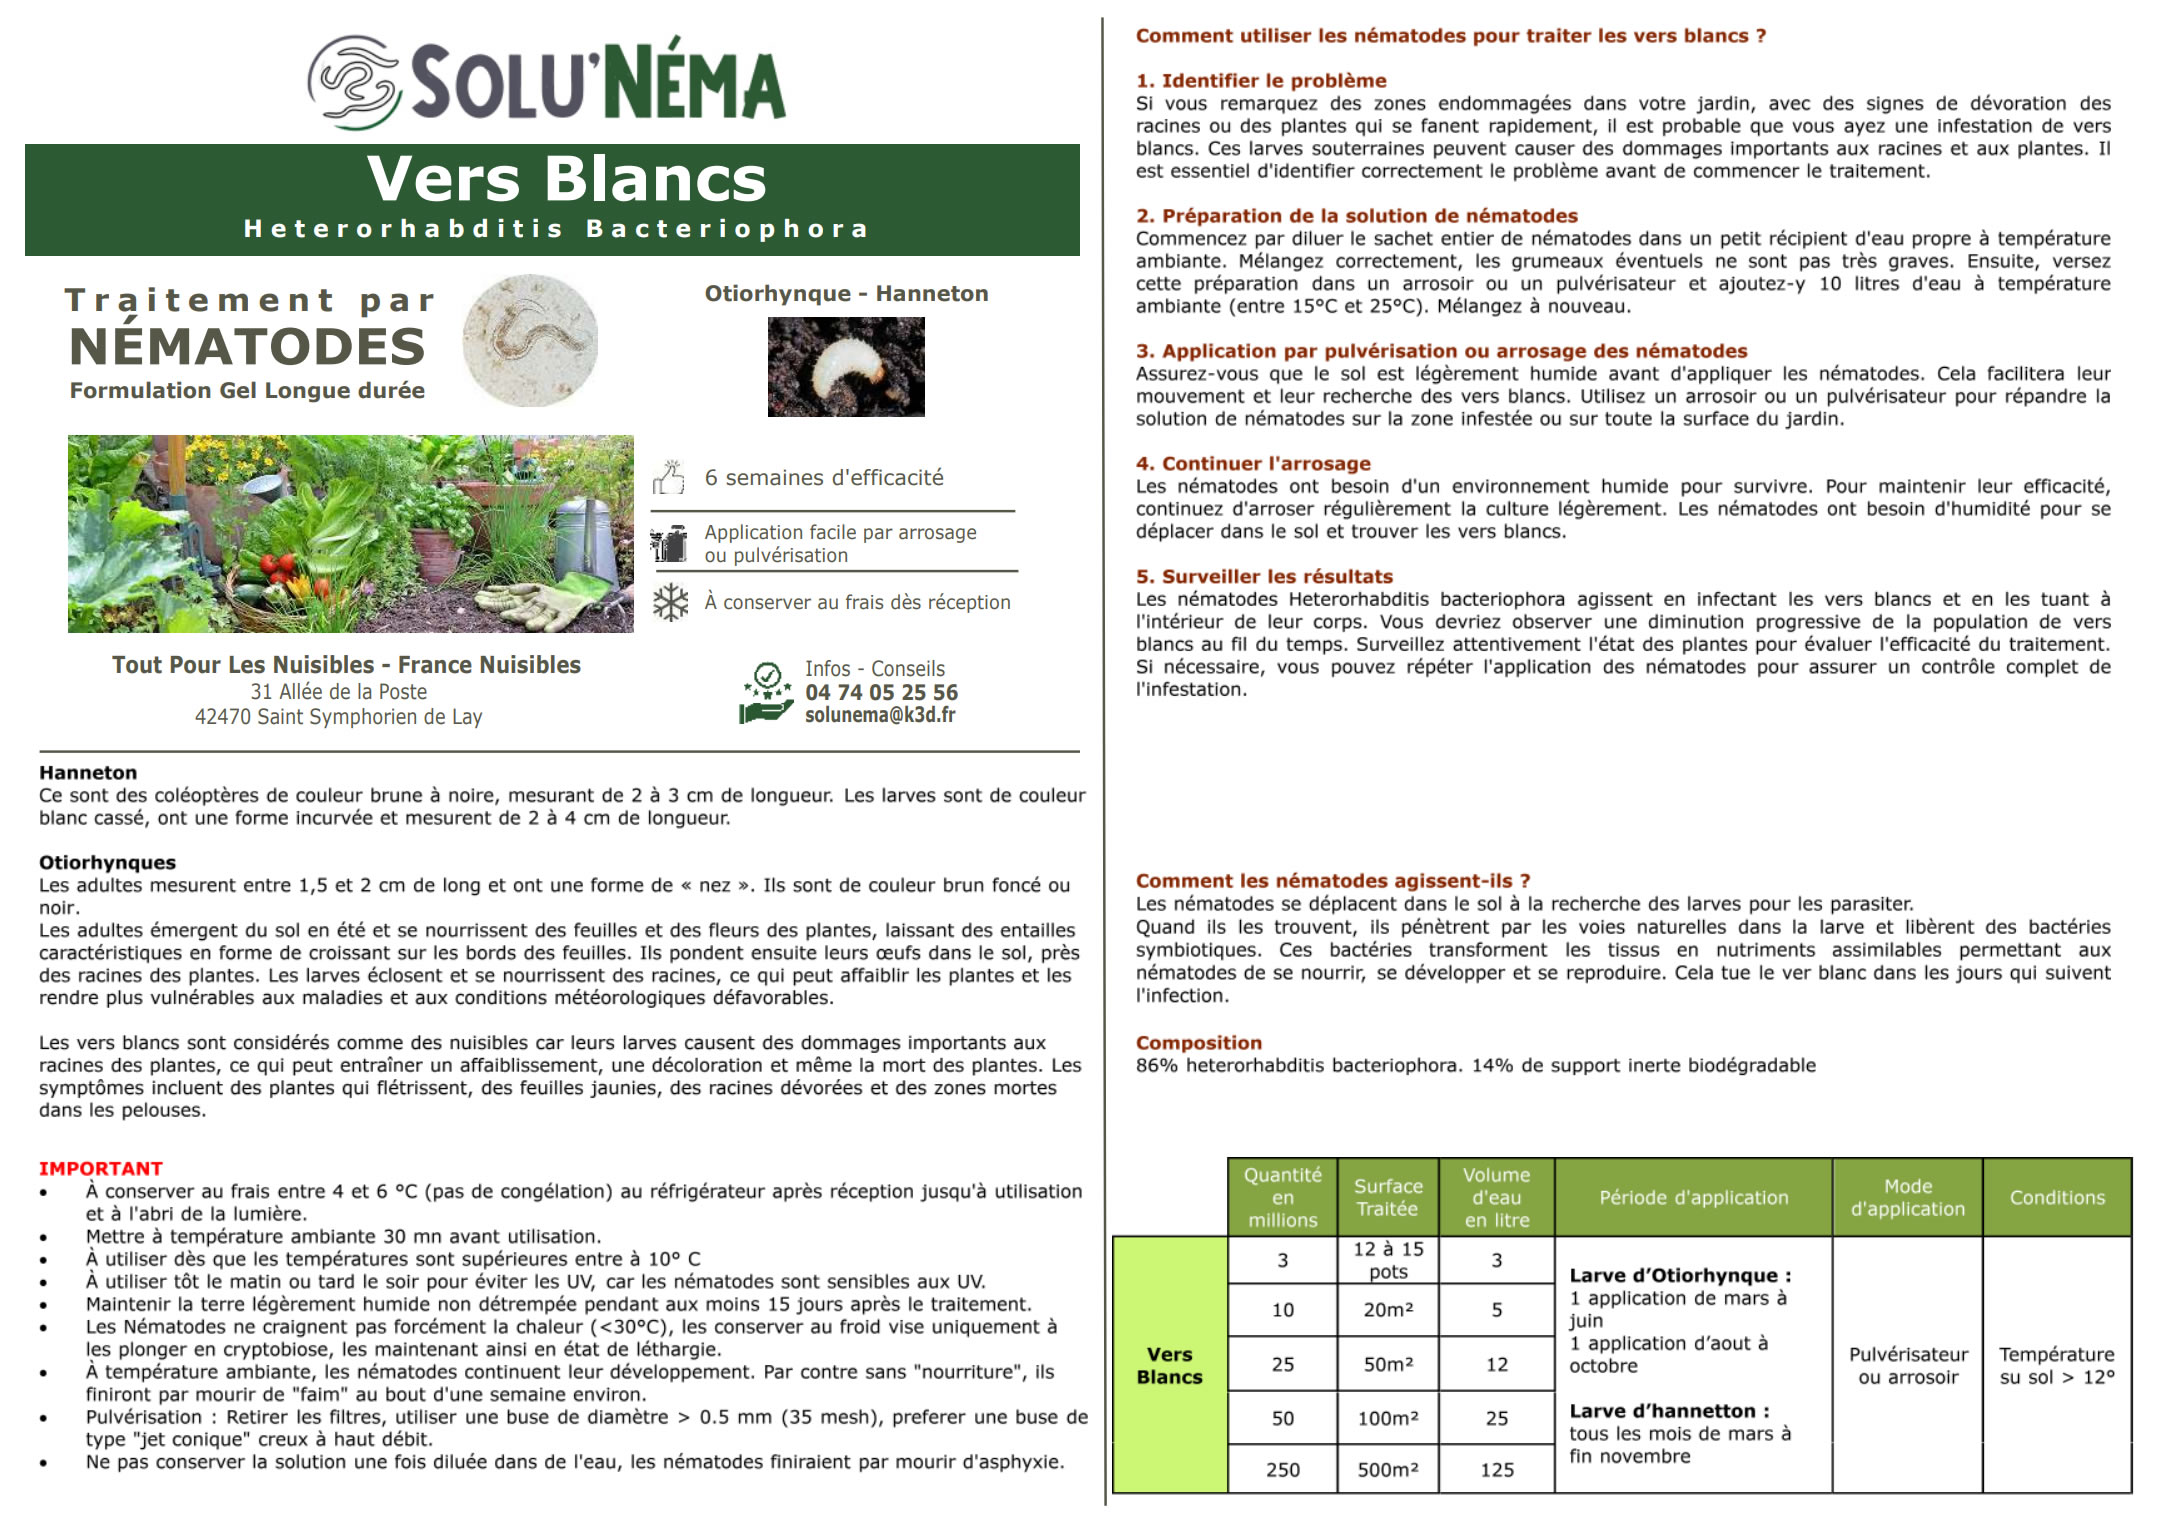 SOLUNEMA - Vers Blancs - Nématodes (HB)